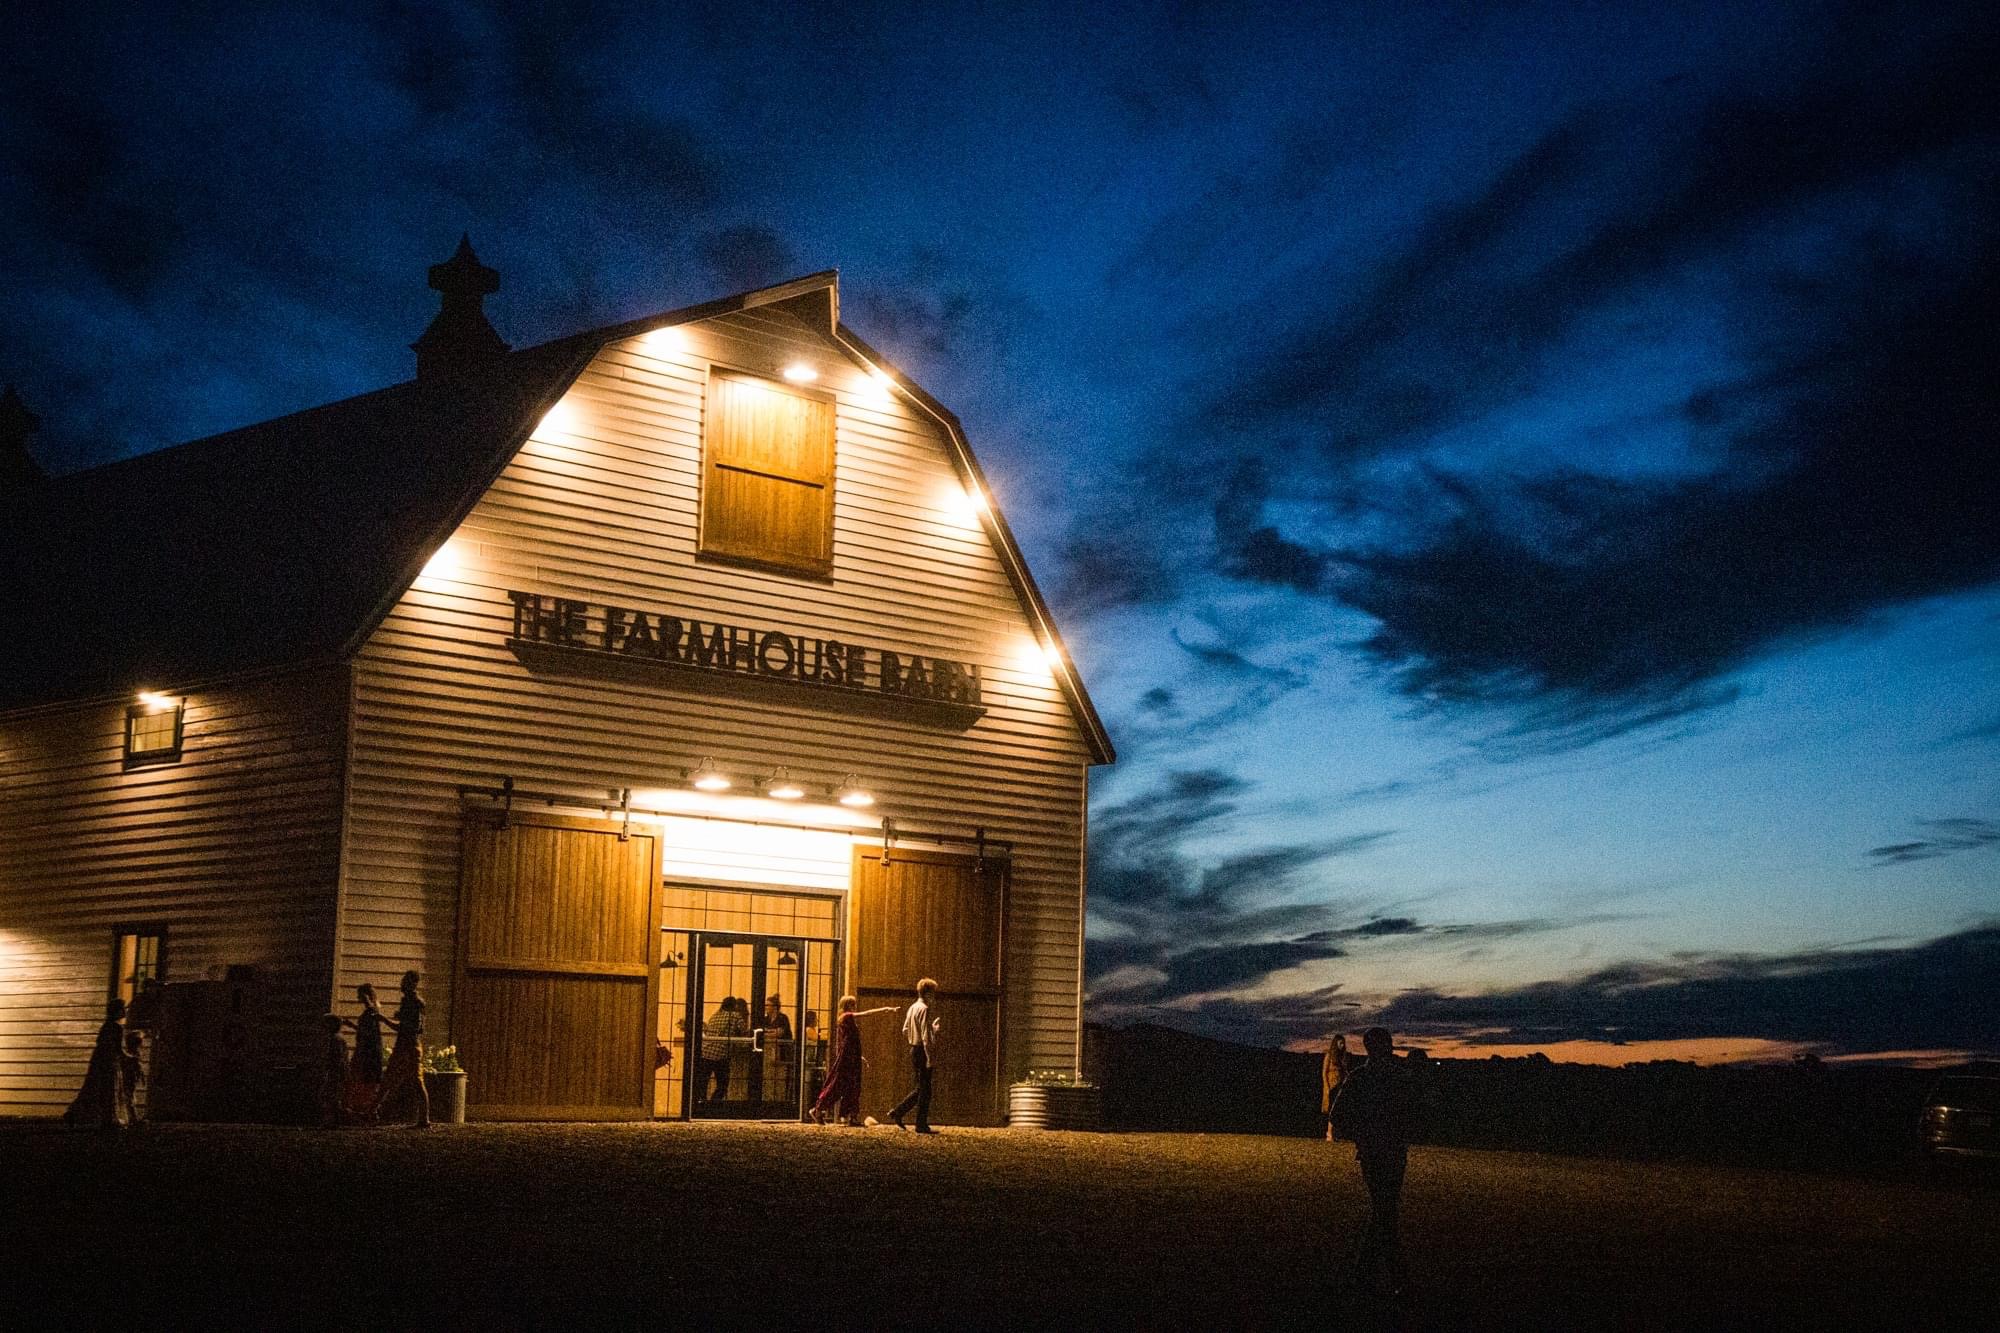 The Farmhouse Barn Vendor Photo